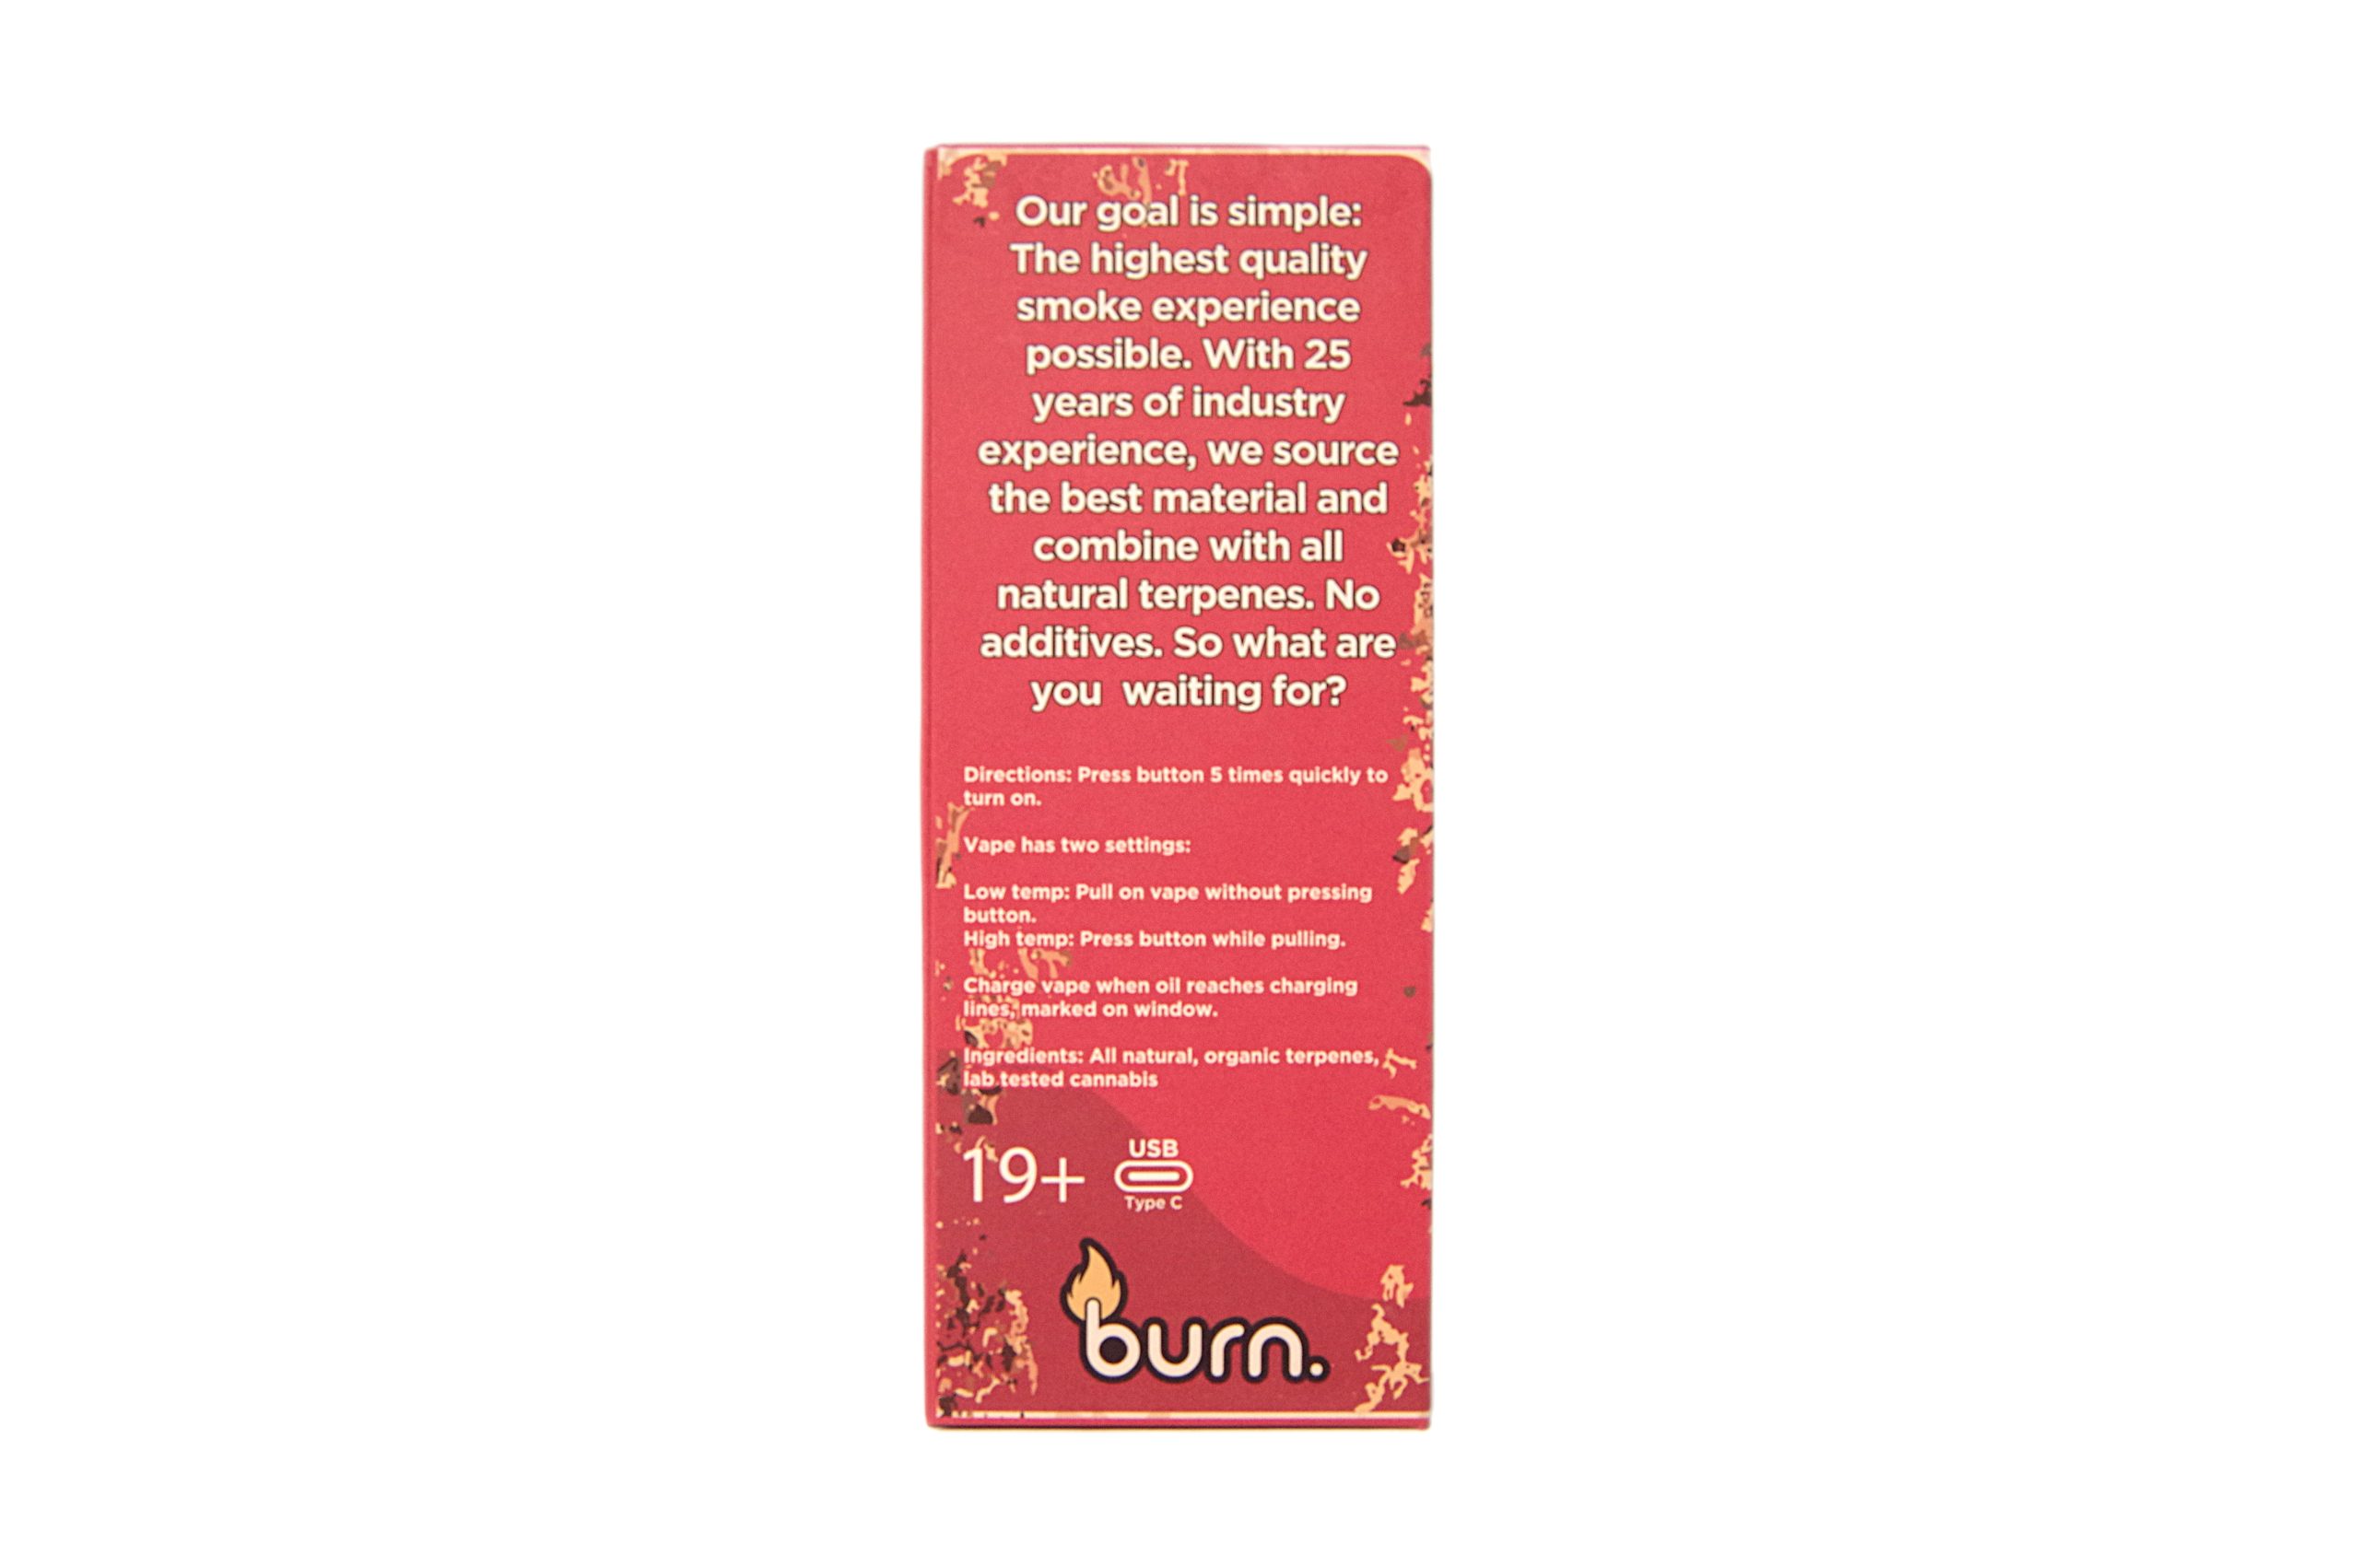 Buy Burn Extracts – Papaya Punch 3ml Mega Sized Disposable Pen online Canada